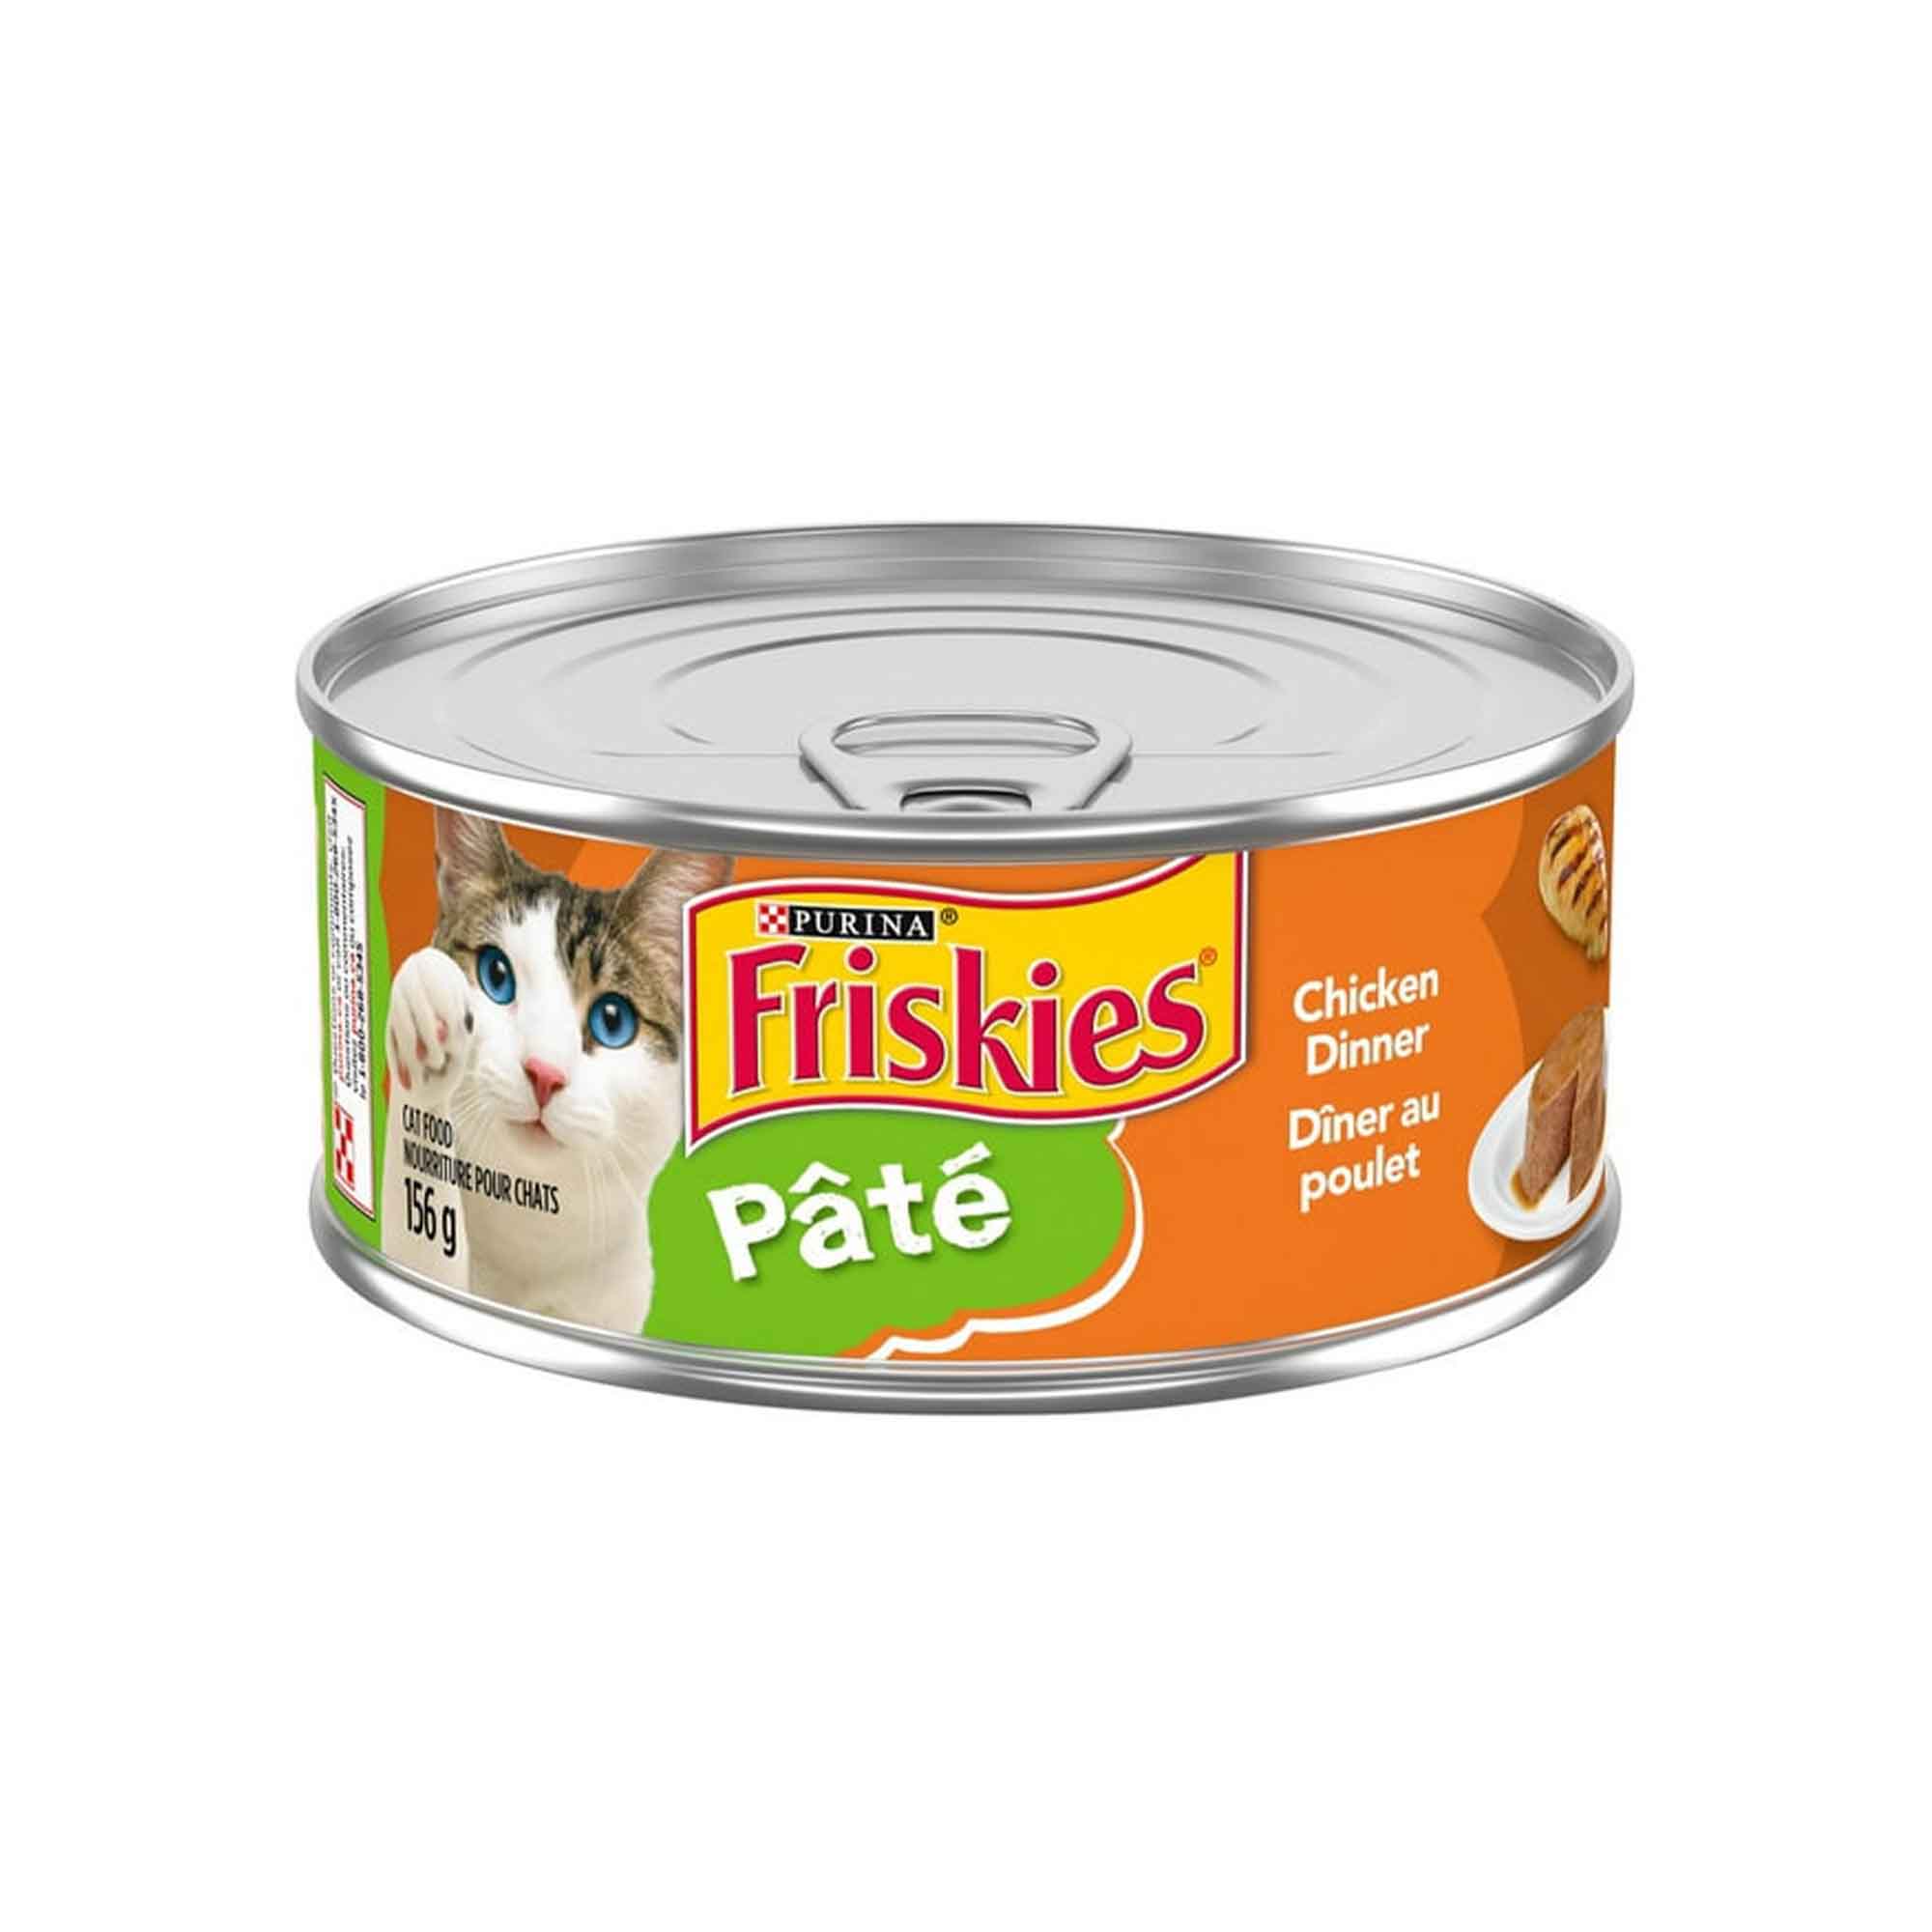 Friskies® Pâté Chicken Dinner, Wet cat food - 156g